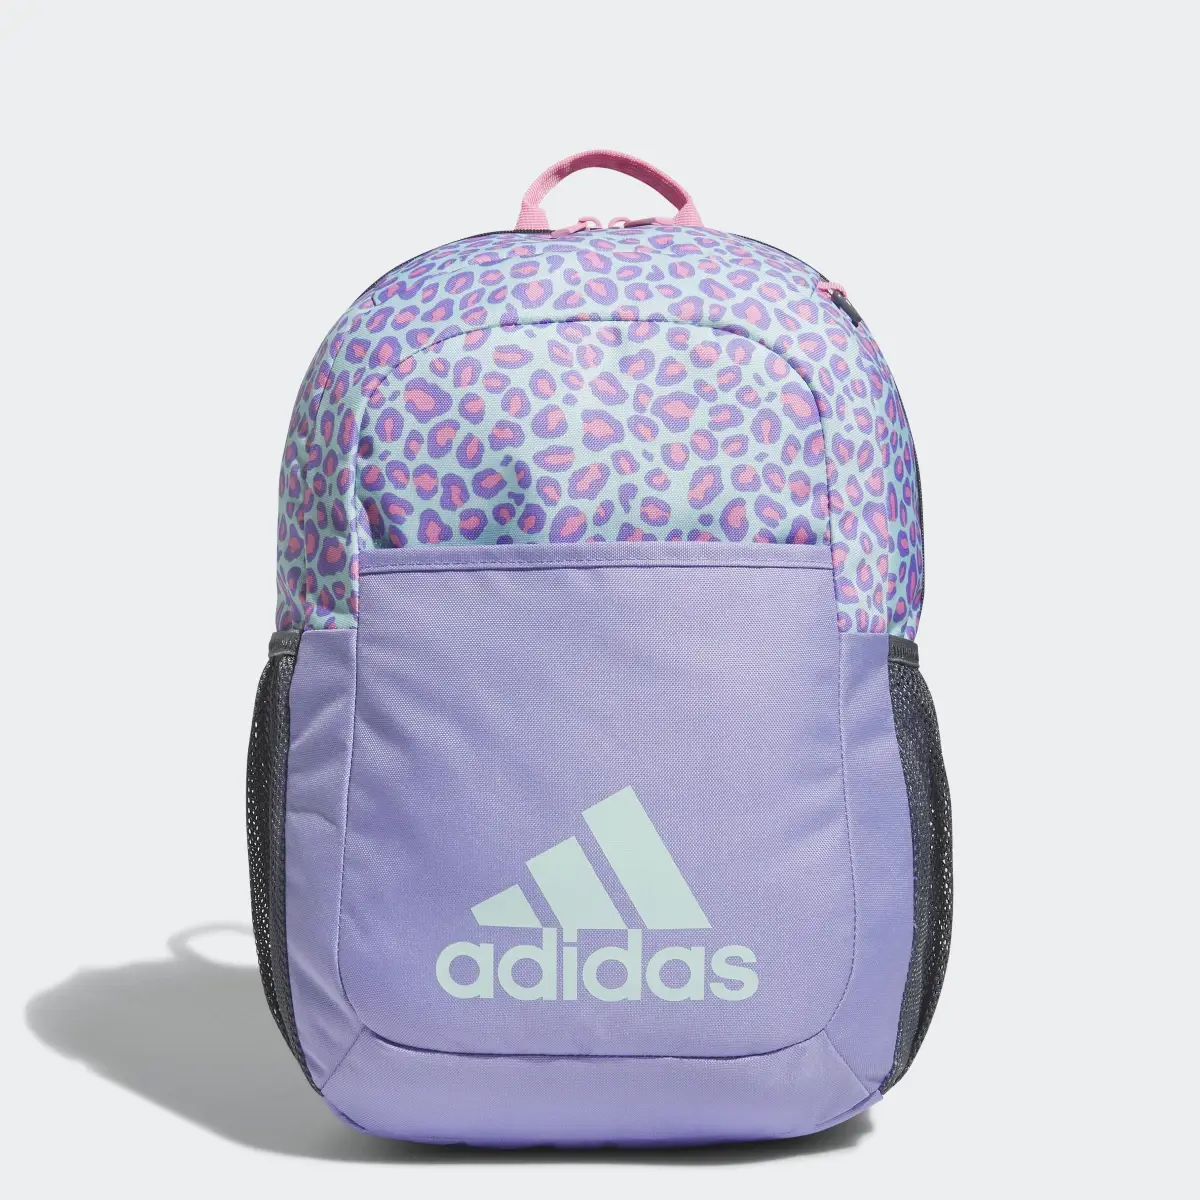 Adidas Ready Backpack. 1